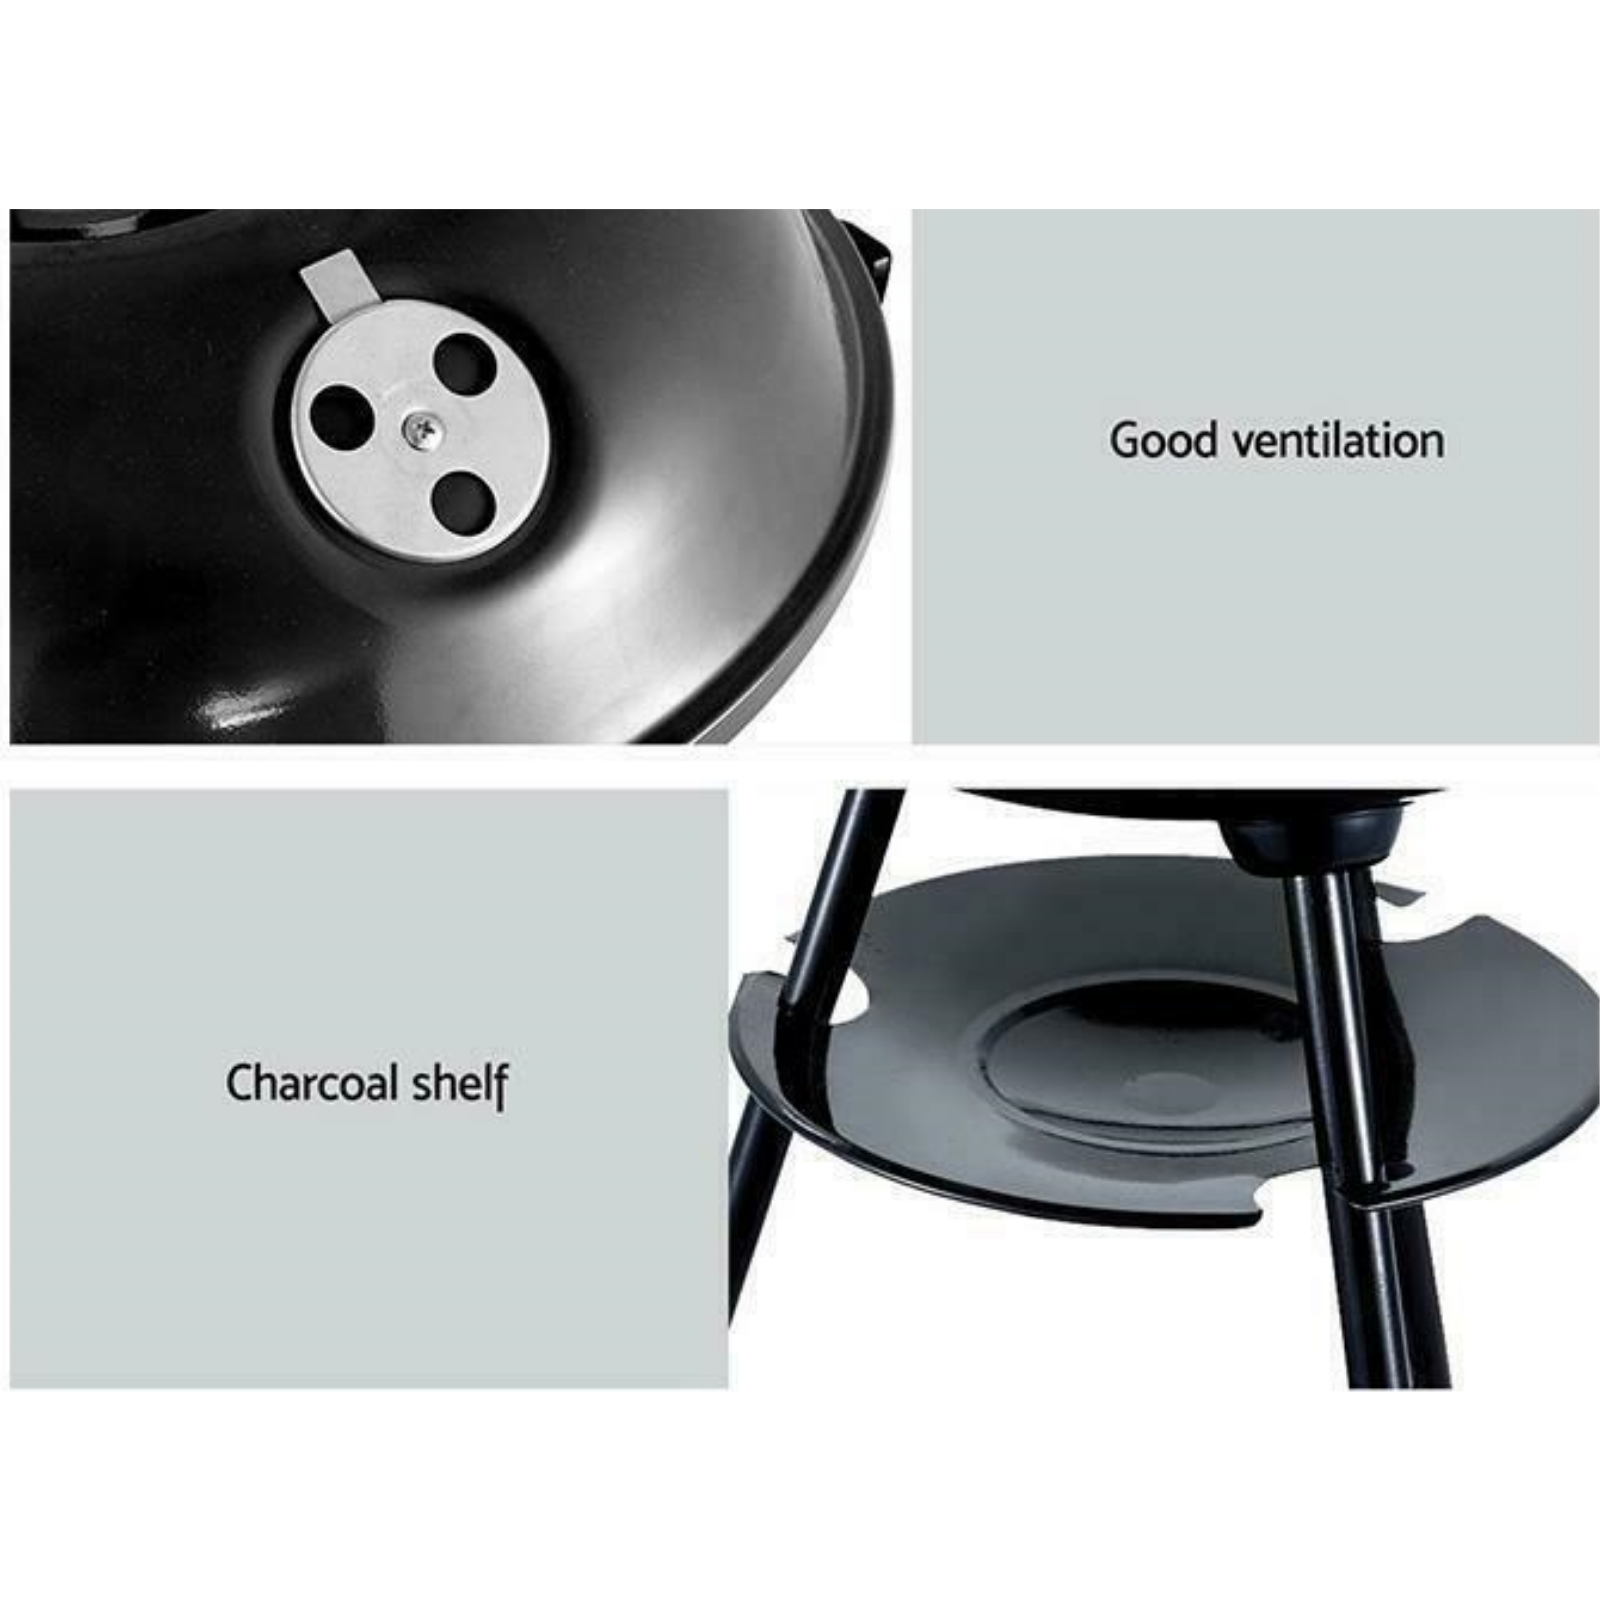 Grillz Charcoal BBQ Smoker has good ventilation, charcoal shelf, two-sided handles, deep base